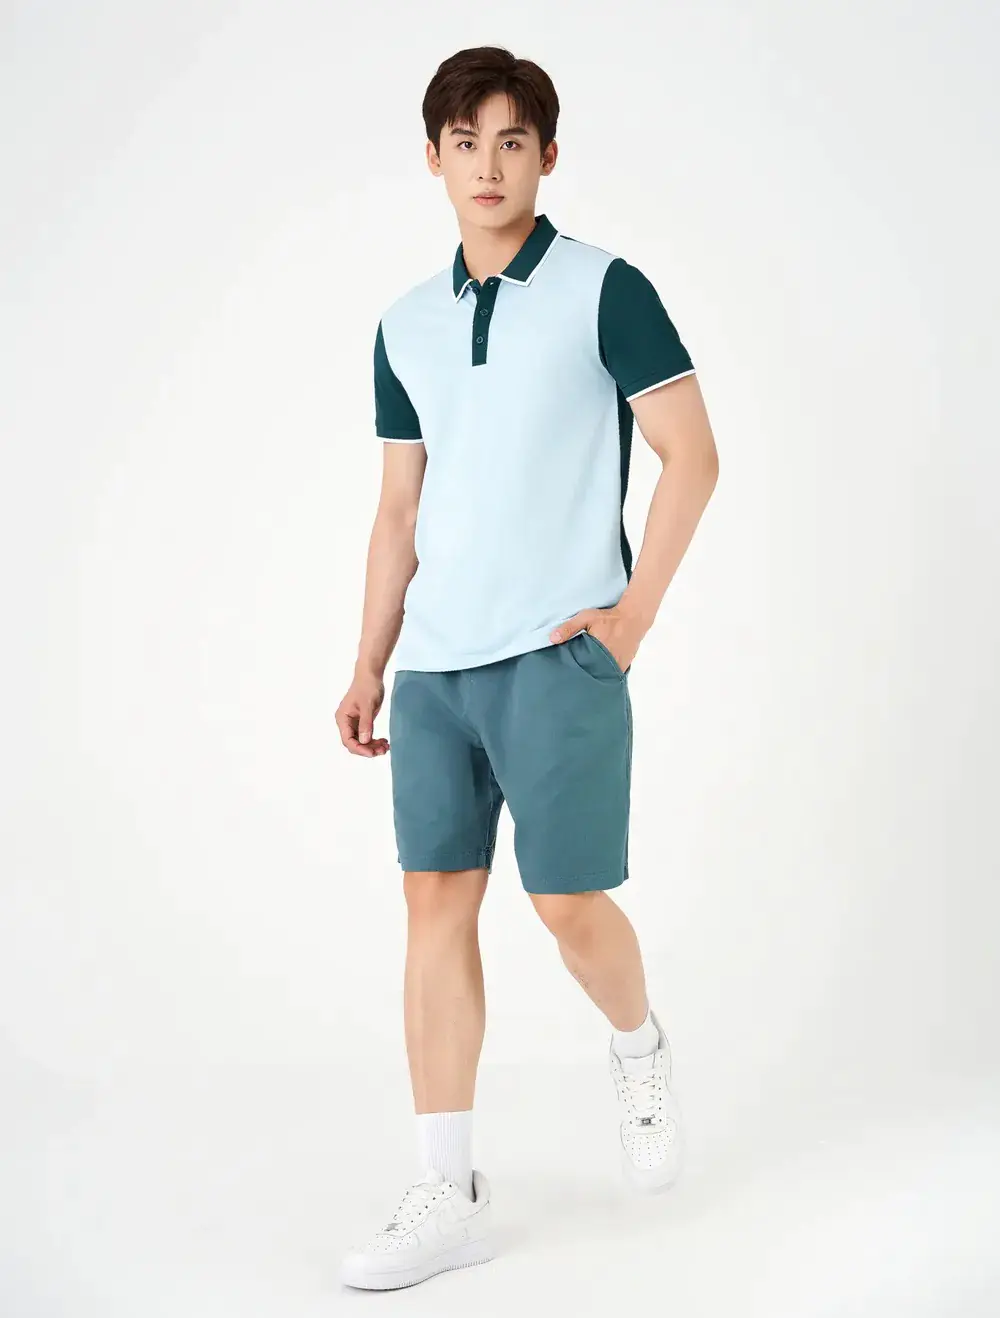 Phối áo polo nam với quần short